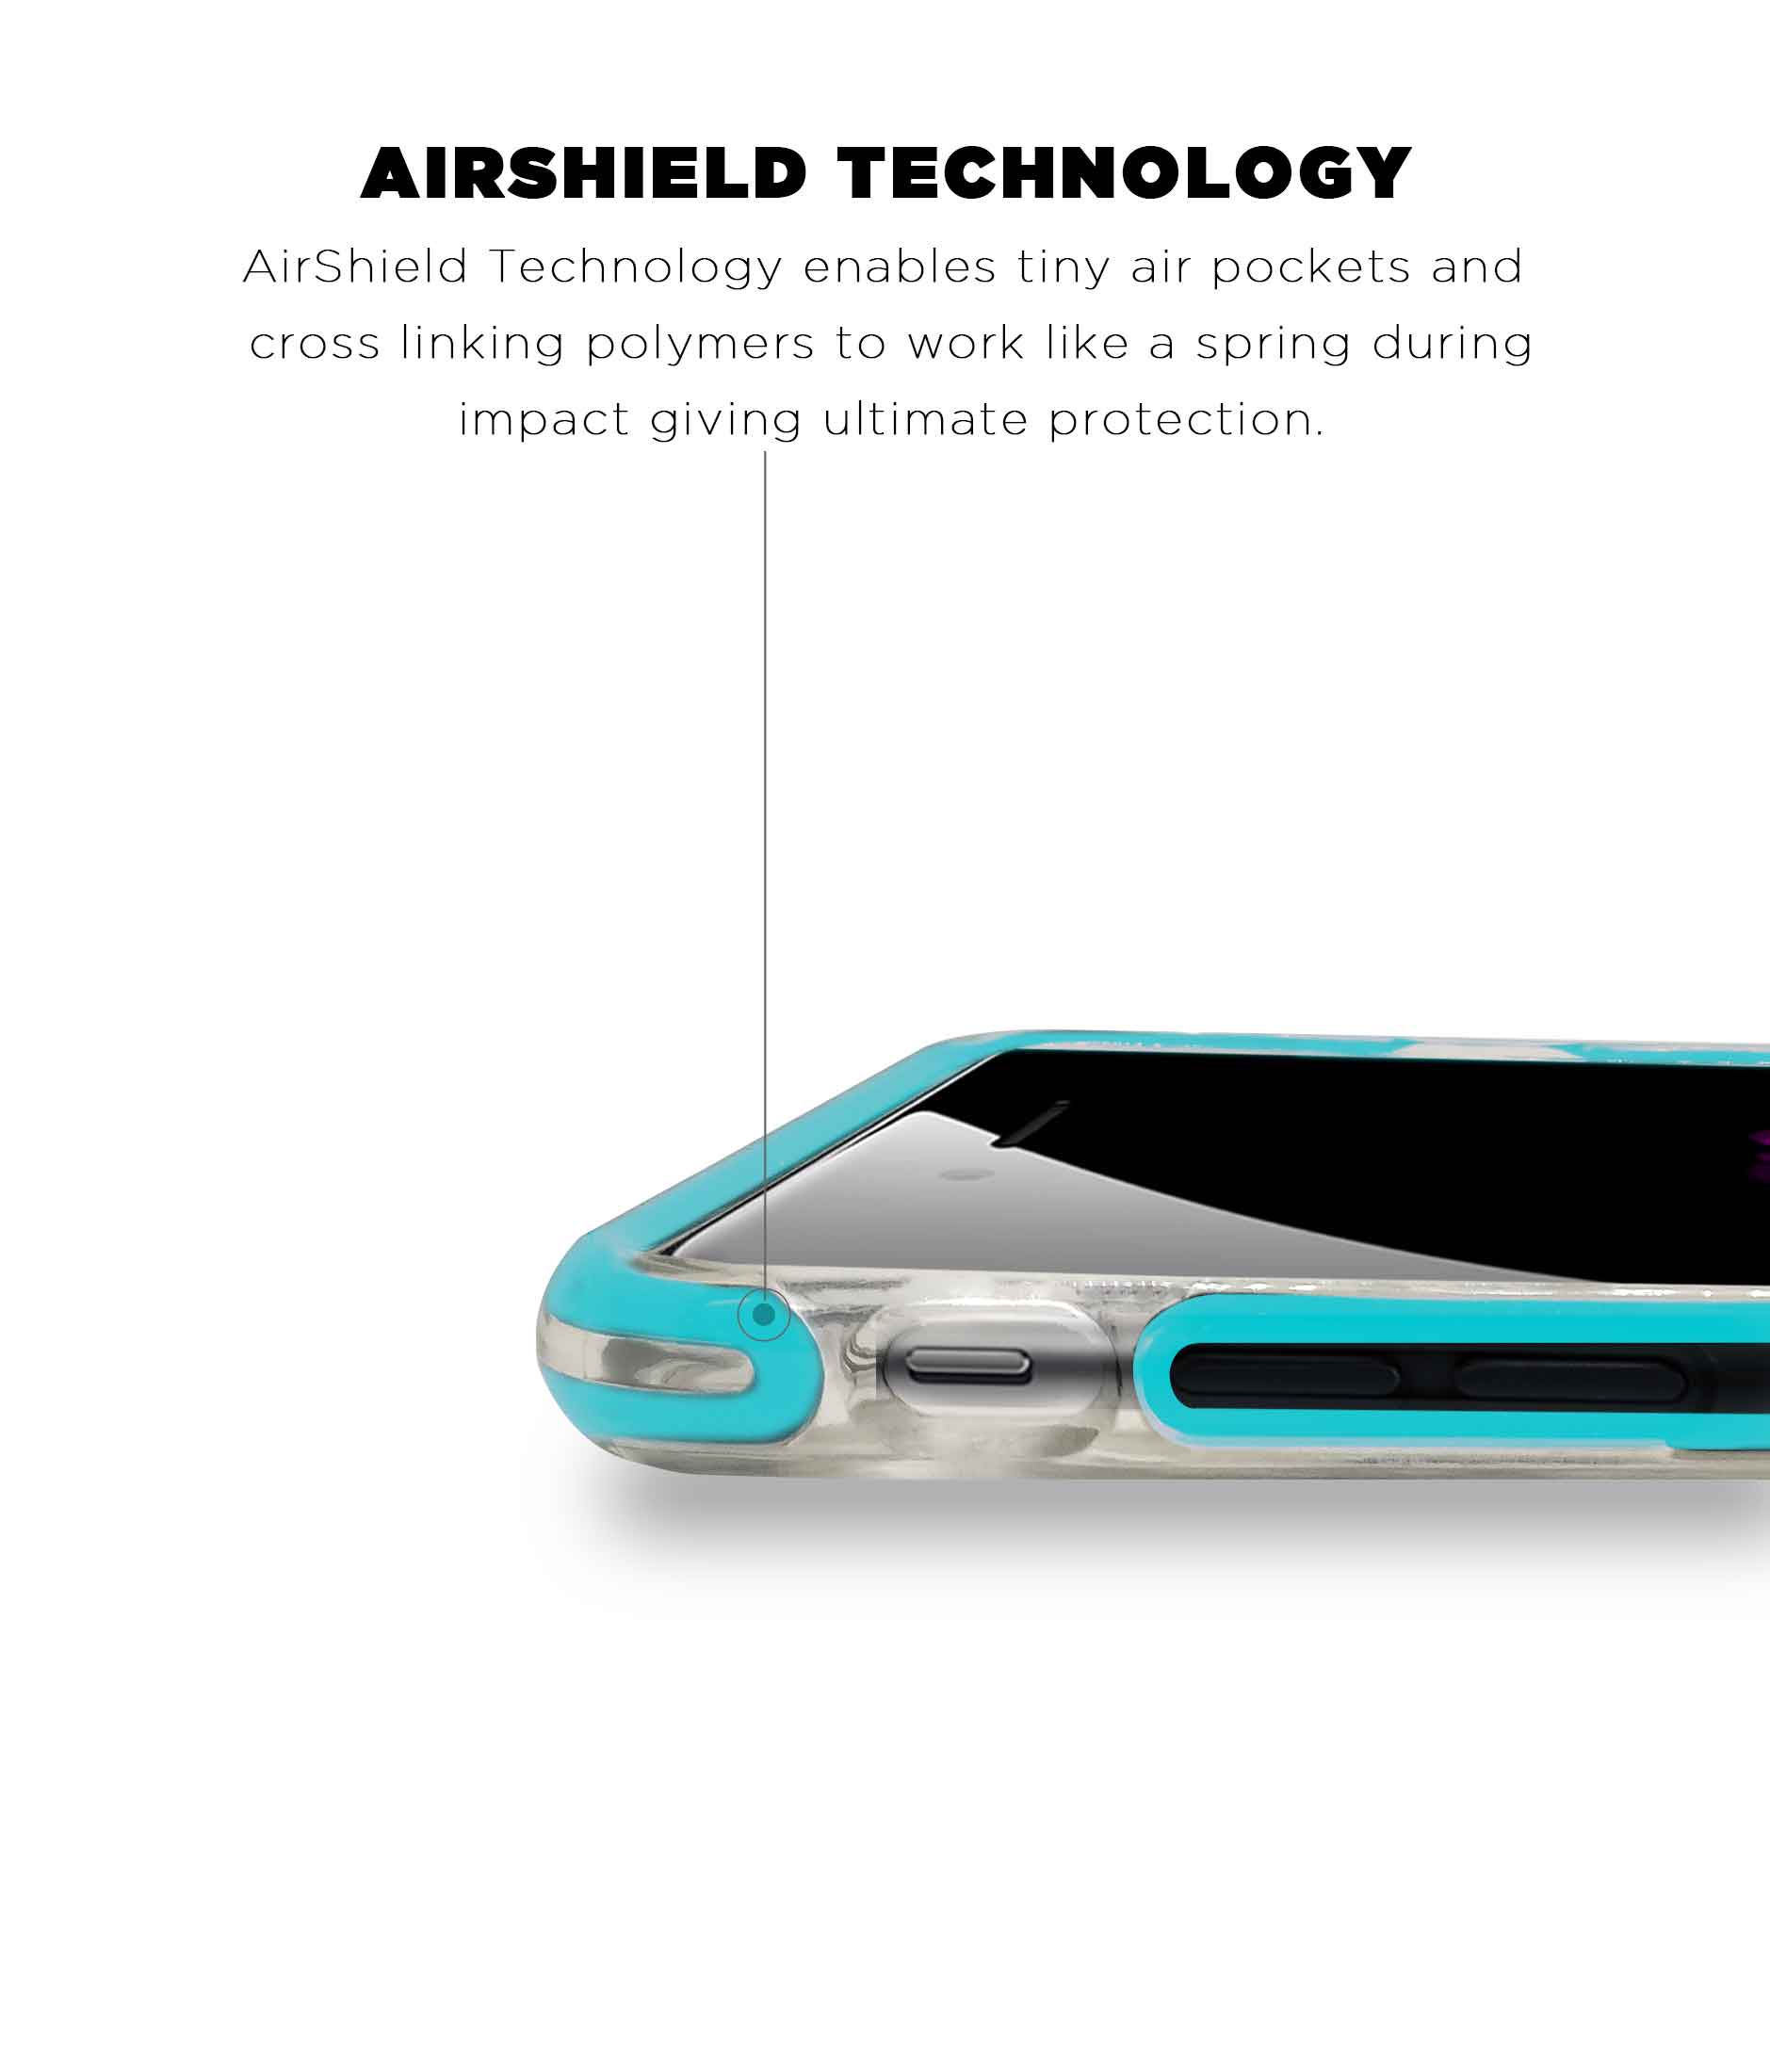 Crest Hufflepuff - Extreme Phone Case for iPhone SE (2020)